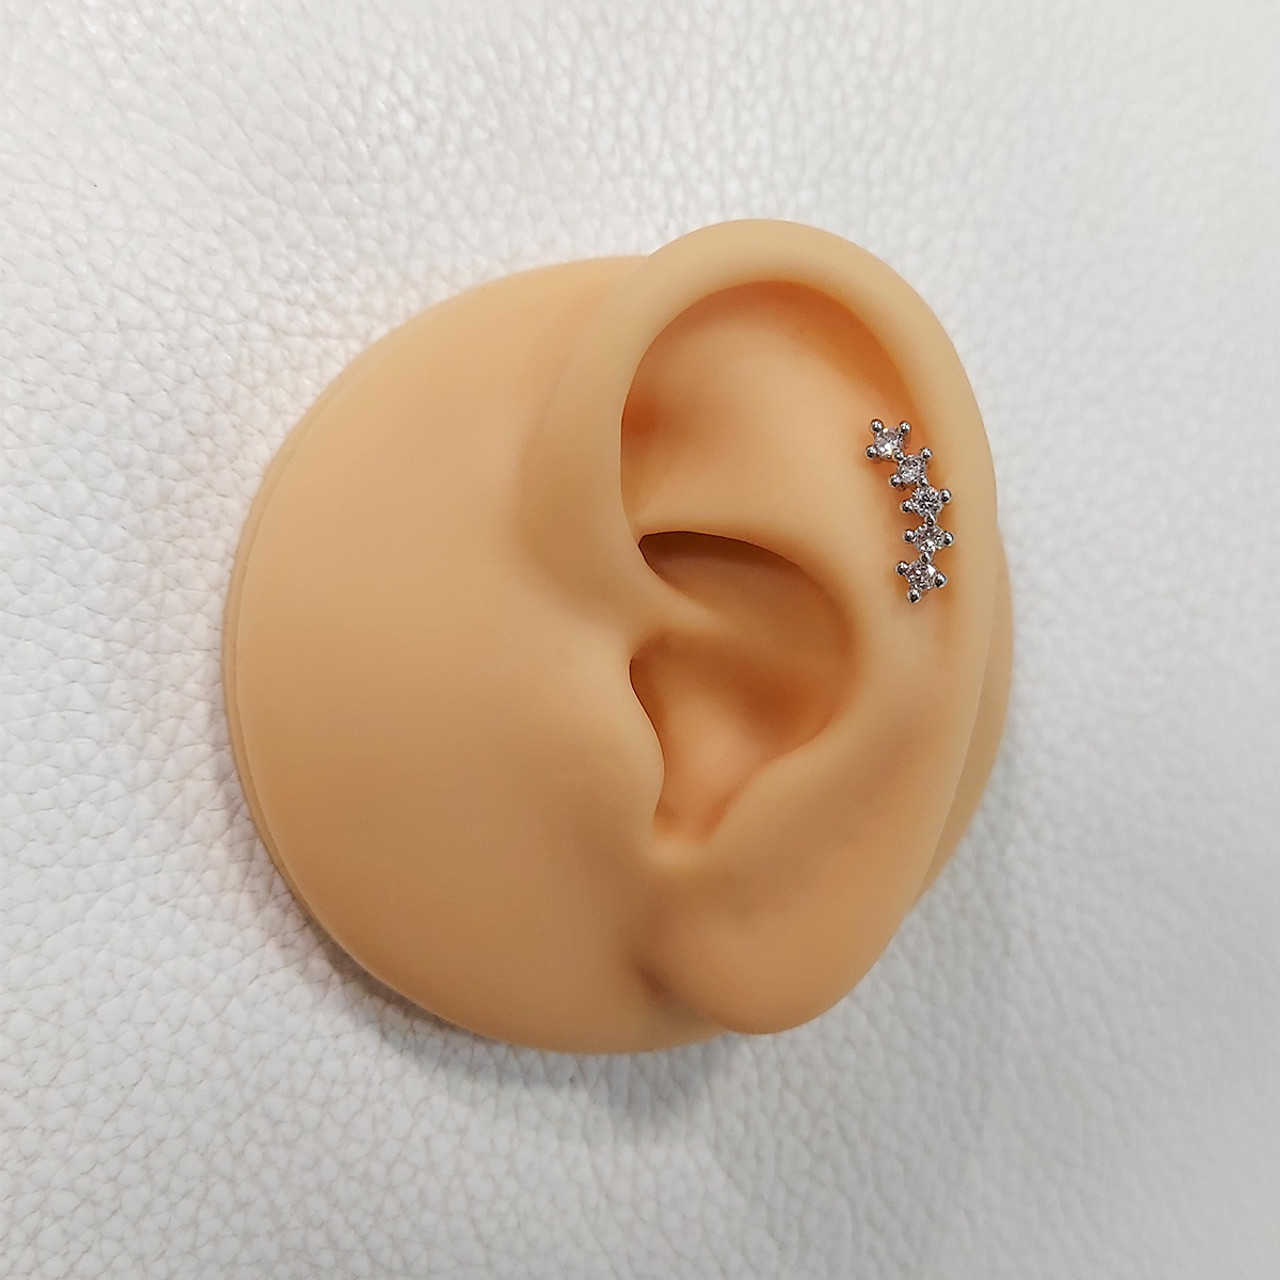 16g Flat Back Earrings Internally Threaded Titanium Cartilage Stud